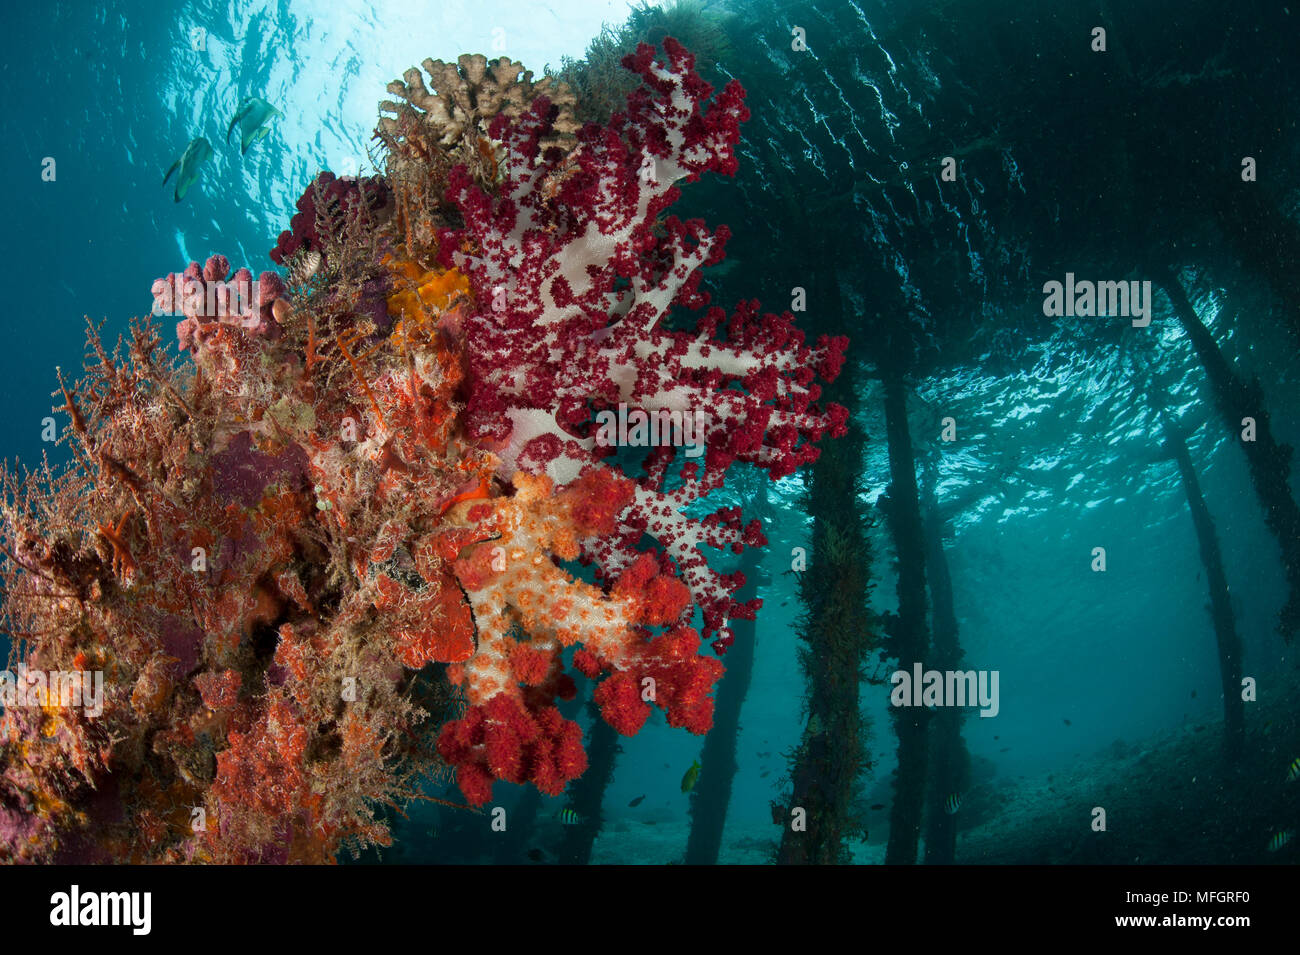 Soft corals (Dendronephthya sp.) adorn the legs of Arborek Jetty, Dmpier Strait, Raja Ampat, Indonesia Stock Photo